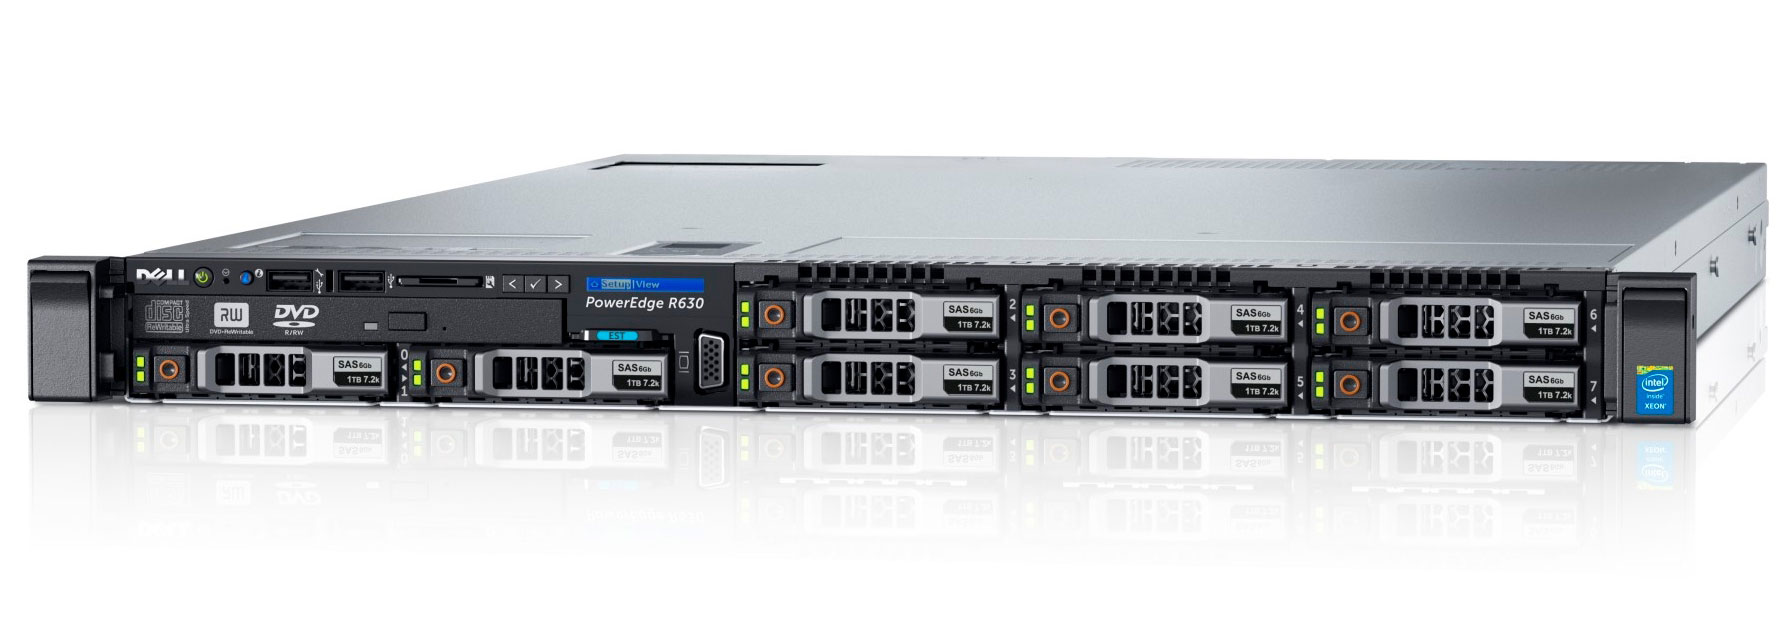 Подробное фото Сервер DELL PowerEdge R630 Xeon 2x E5-2683v3 128Gb 2133P DDR4 8x noHDD 2.5", SAS RAID Perc H730 mini, 1024Mb, DVD, 2*PSU